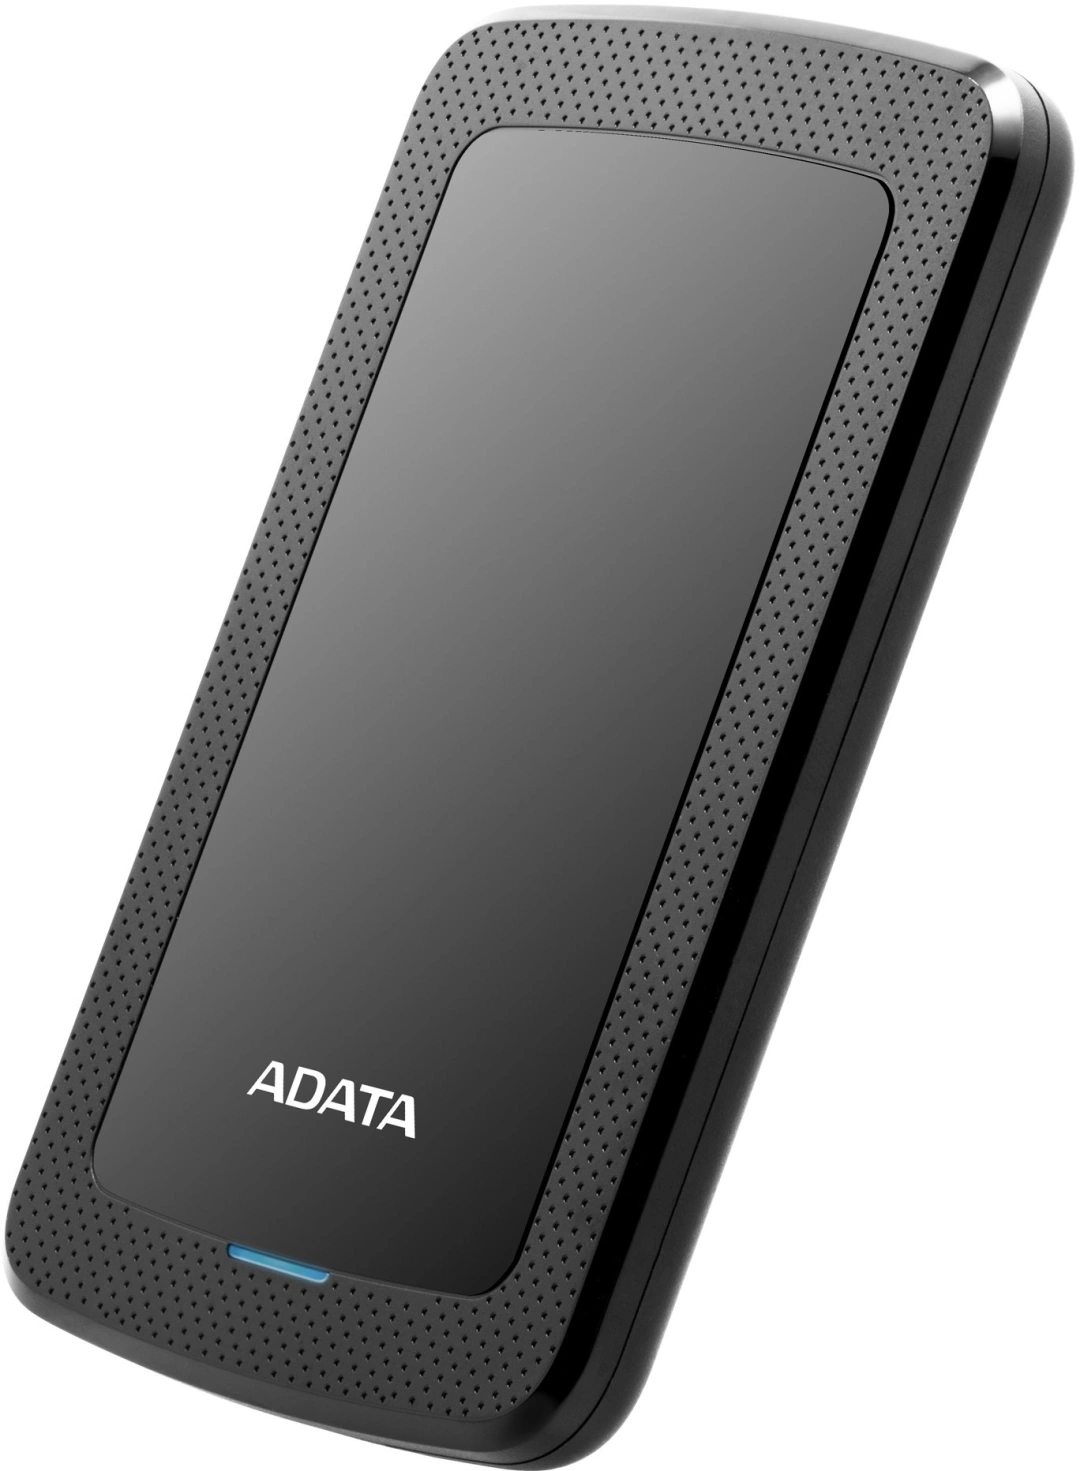 ADATA HV300 2TB, Black